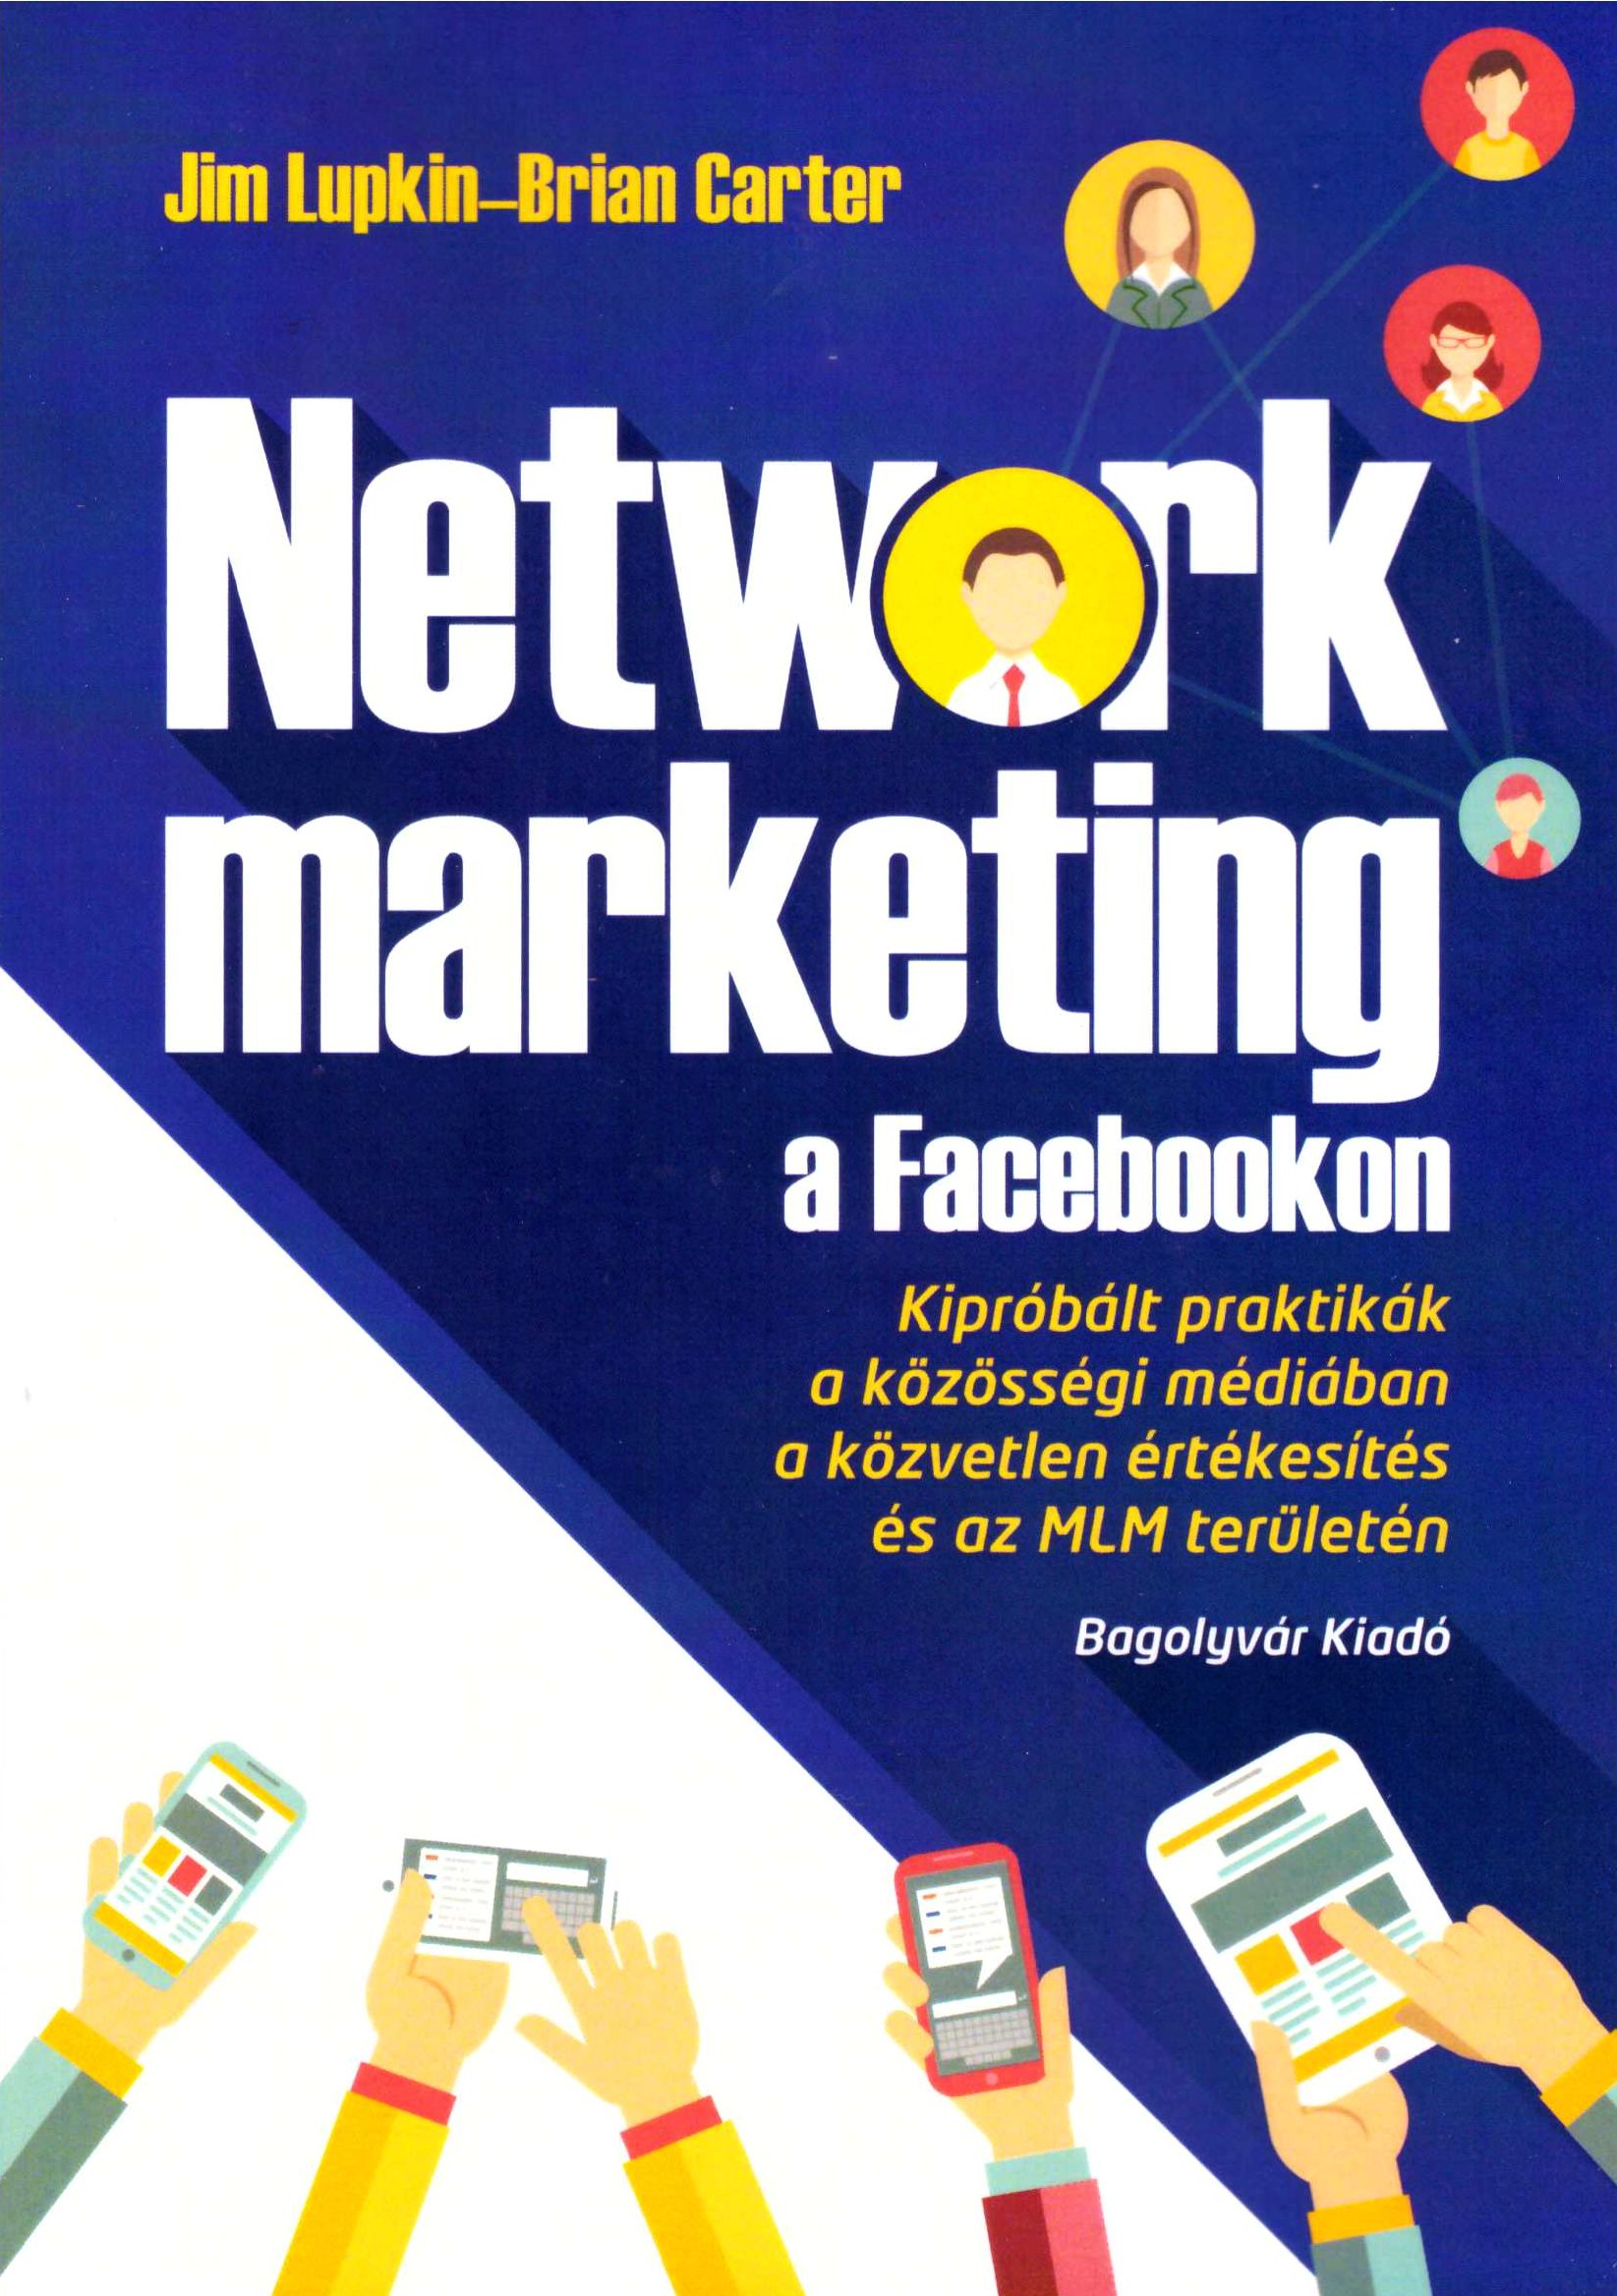 Jim Lupkin, Brian Carter: Network marketing a facebookon